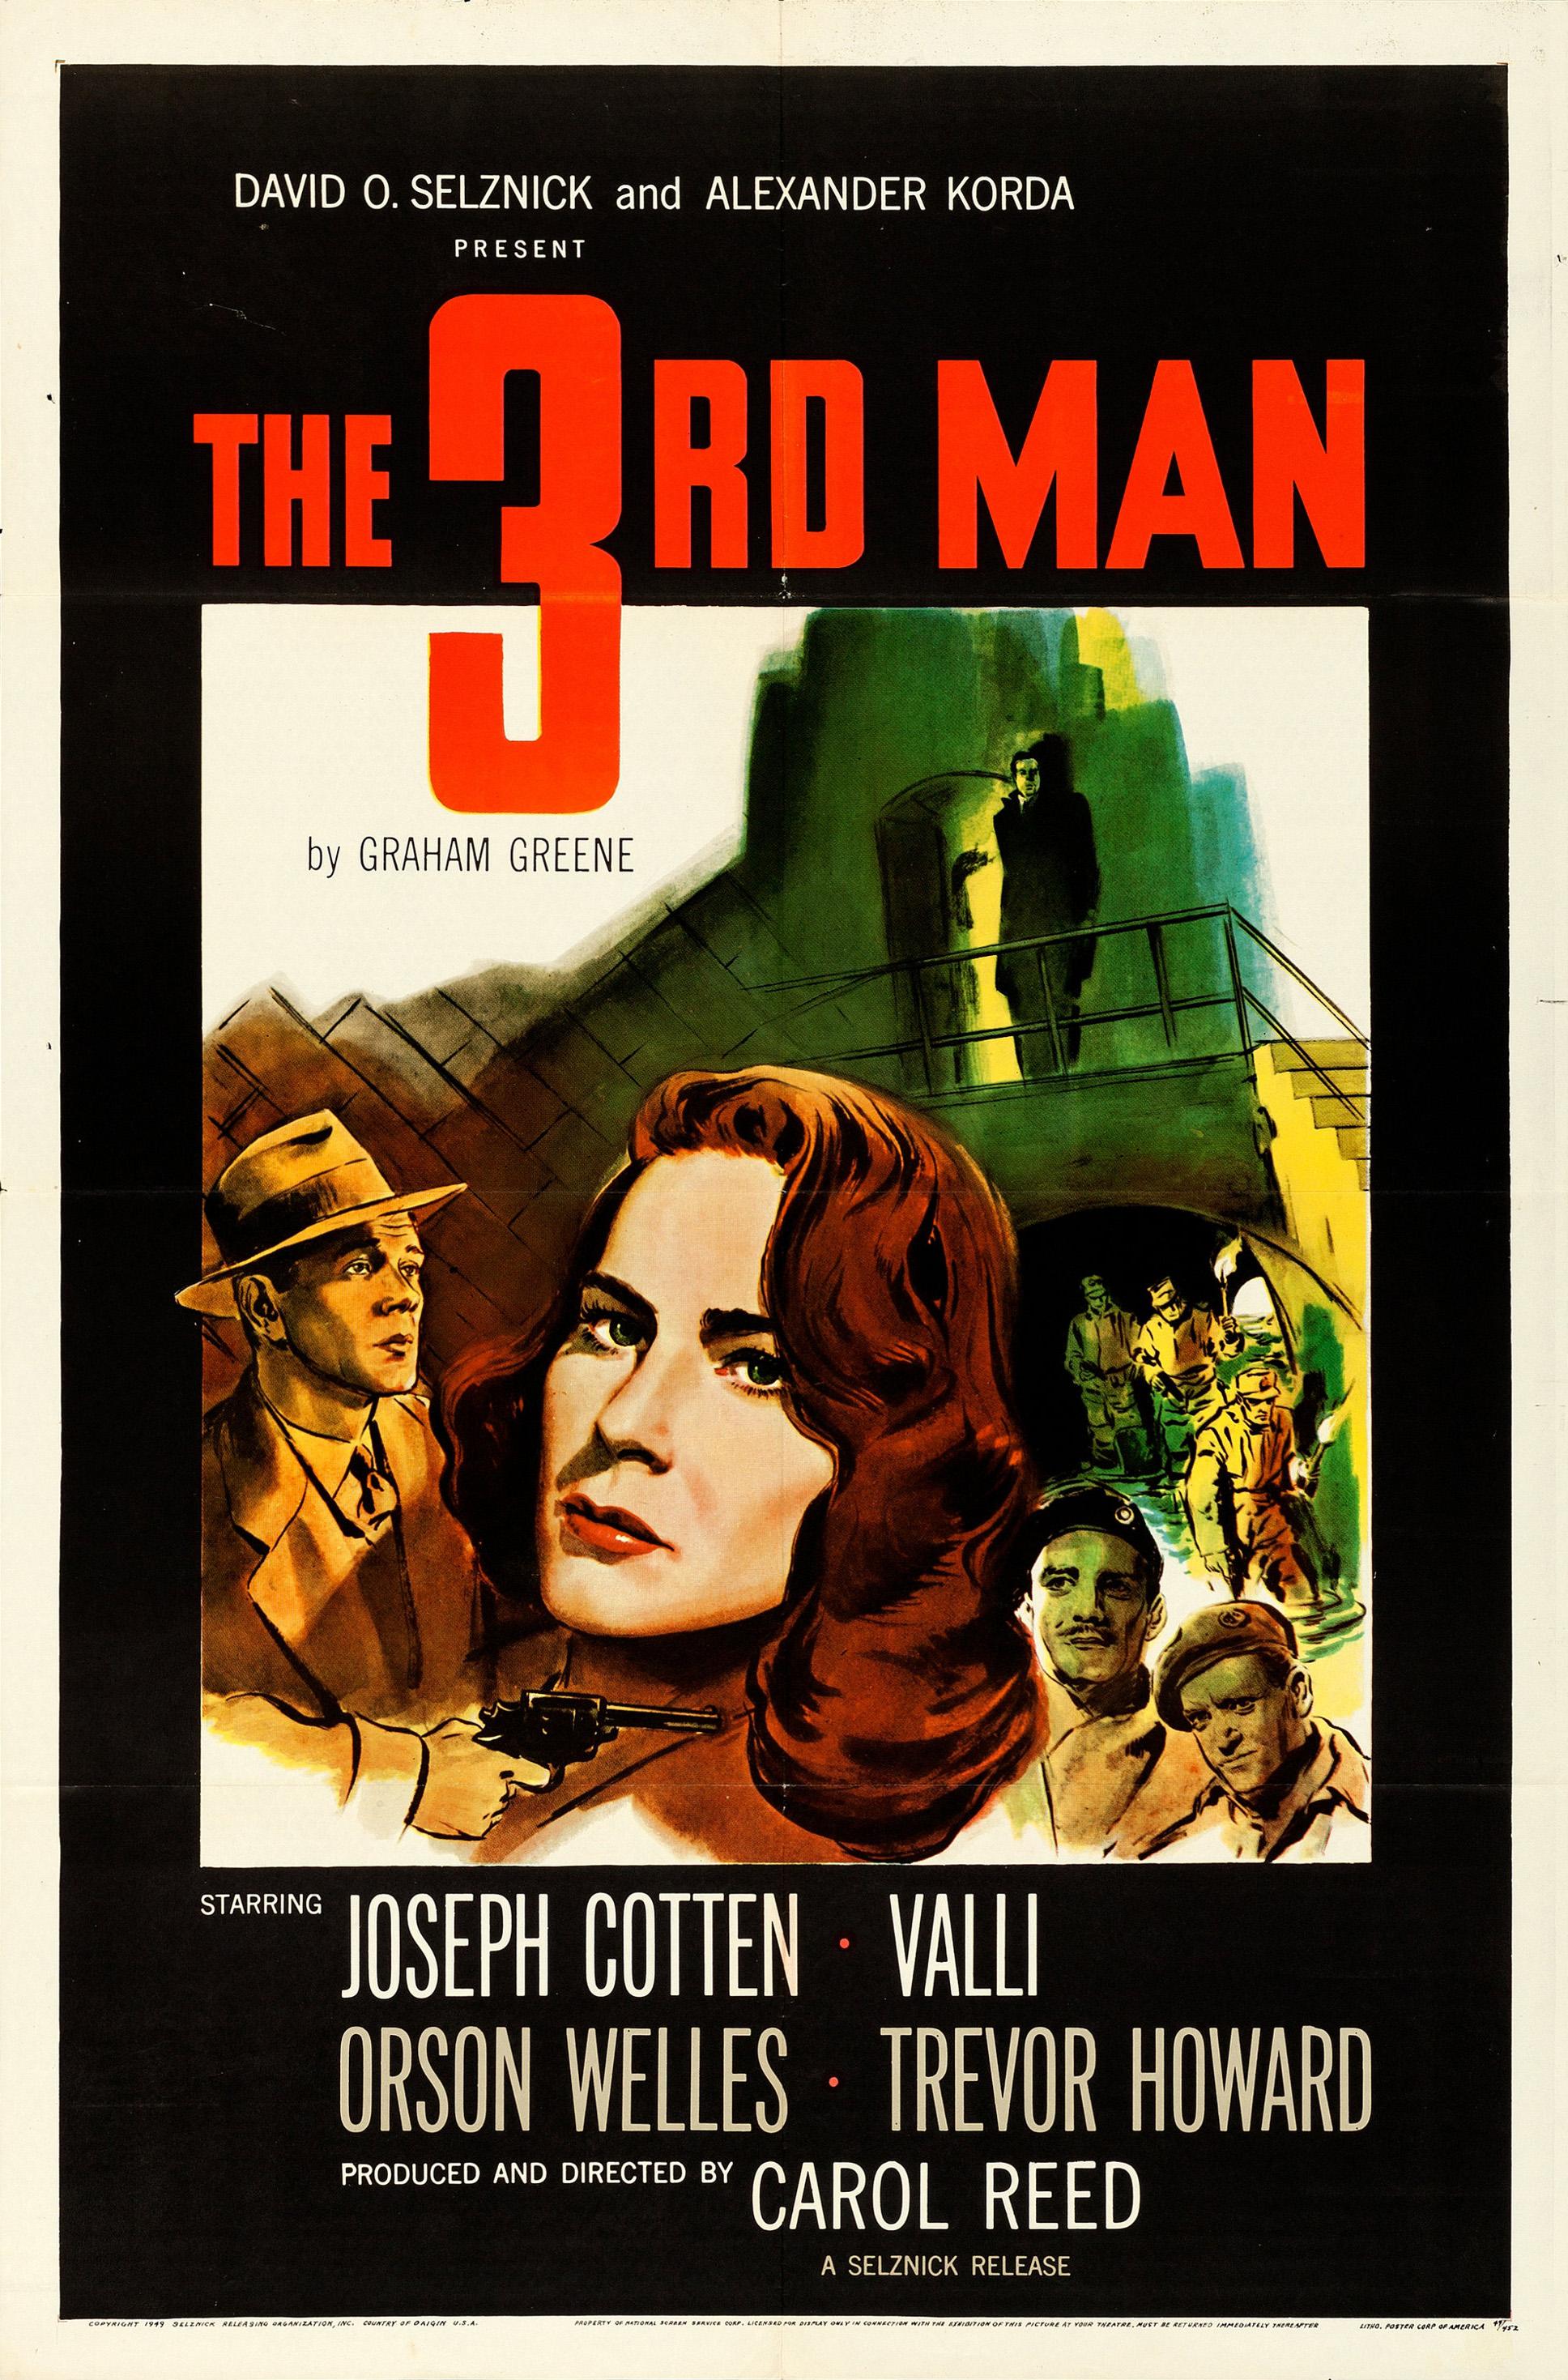 A harmadik ember (The Third Man)